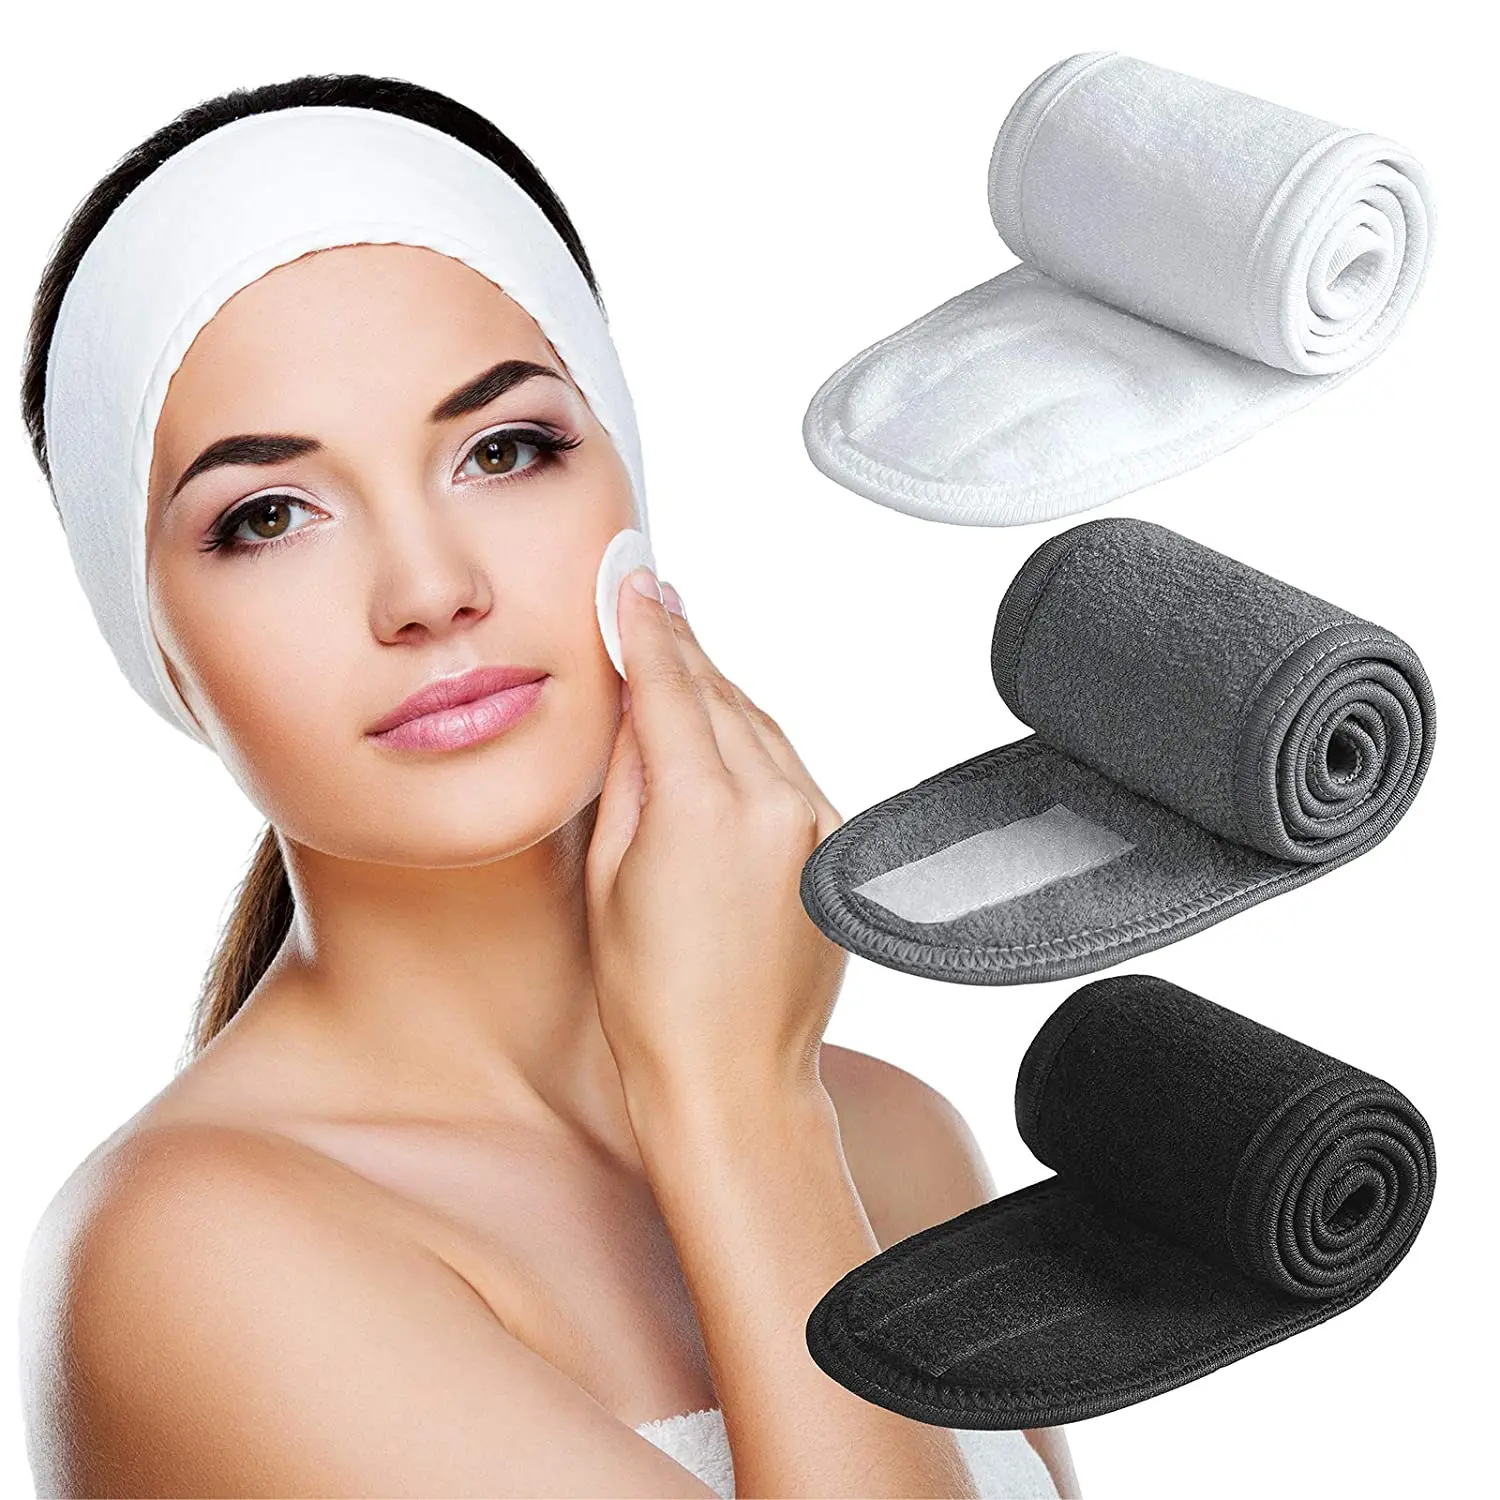 Spa Headband - 3 Pack Ultra Soft Adjustable Face Wash Headband Terry Cloth Stretch Make Up Wrap for Face Washing, Shower, Yoga брюки для бега uniqlo ultra stretch dry ex